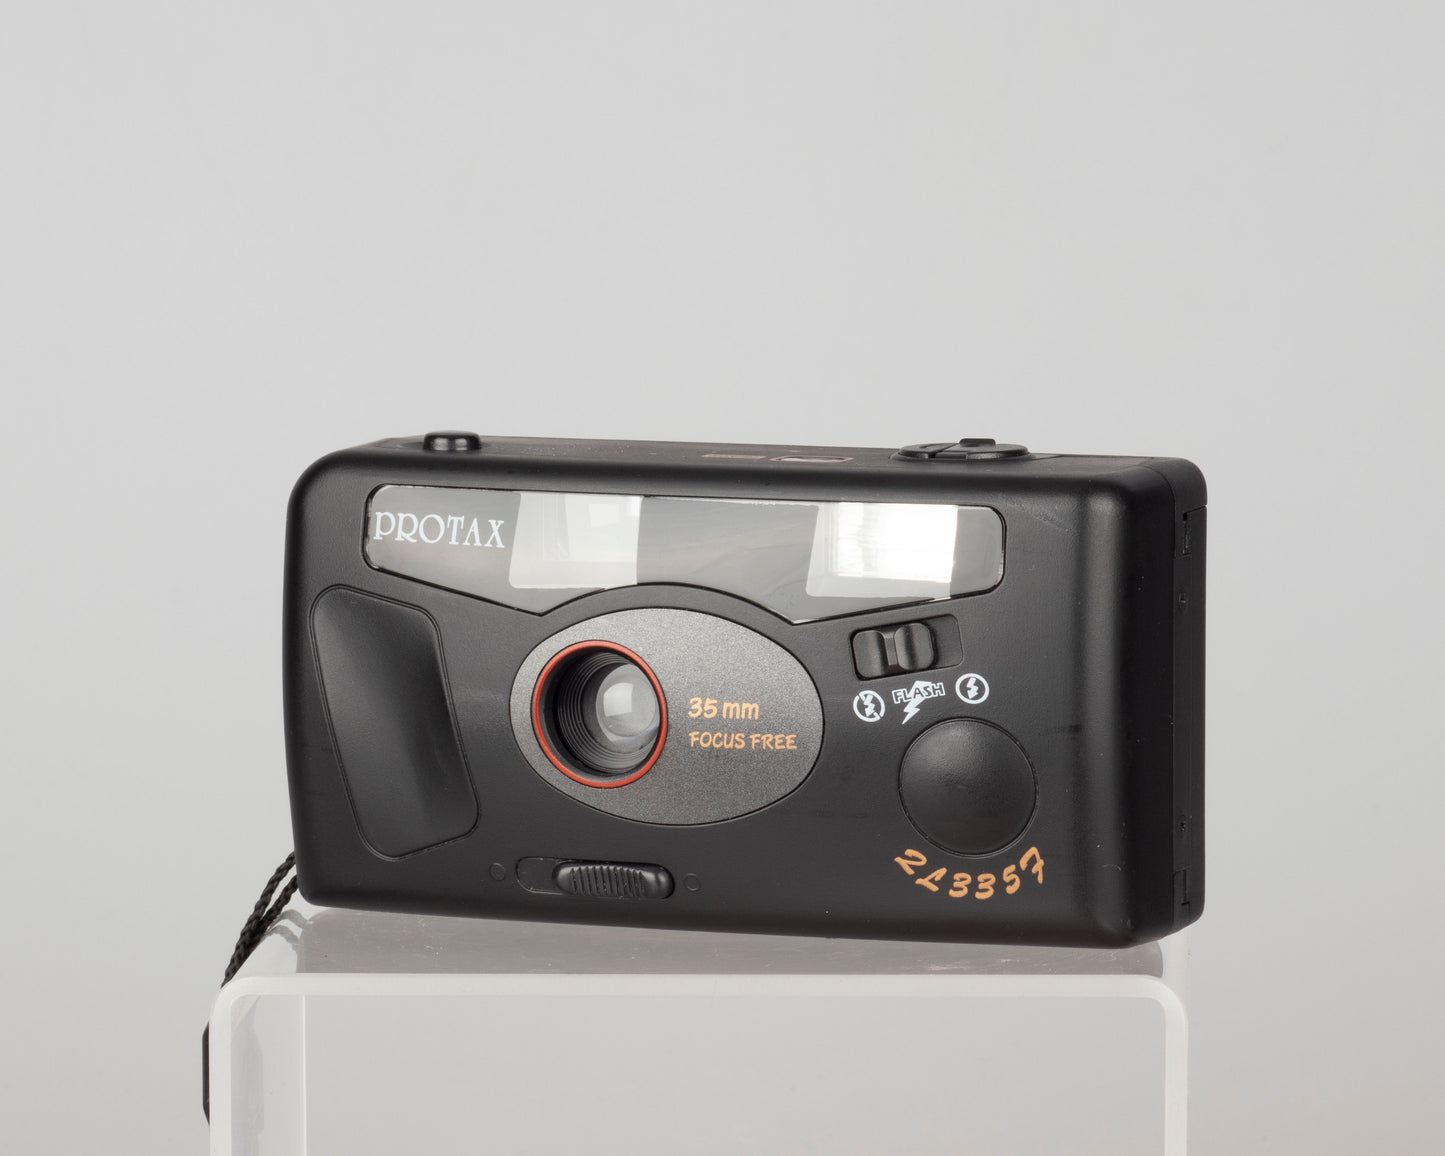 Protax 35mm Focus Free camera